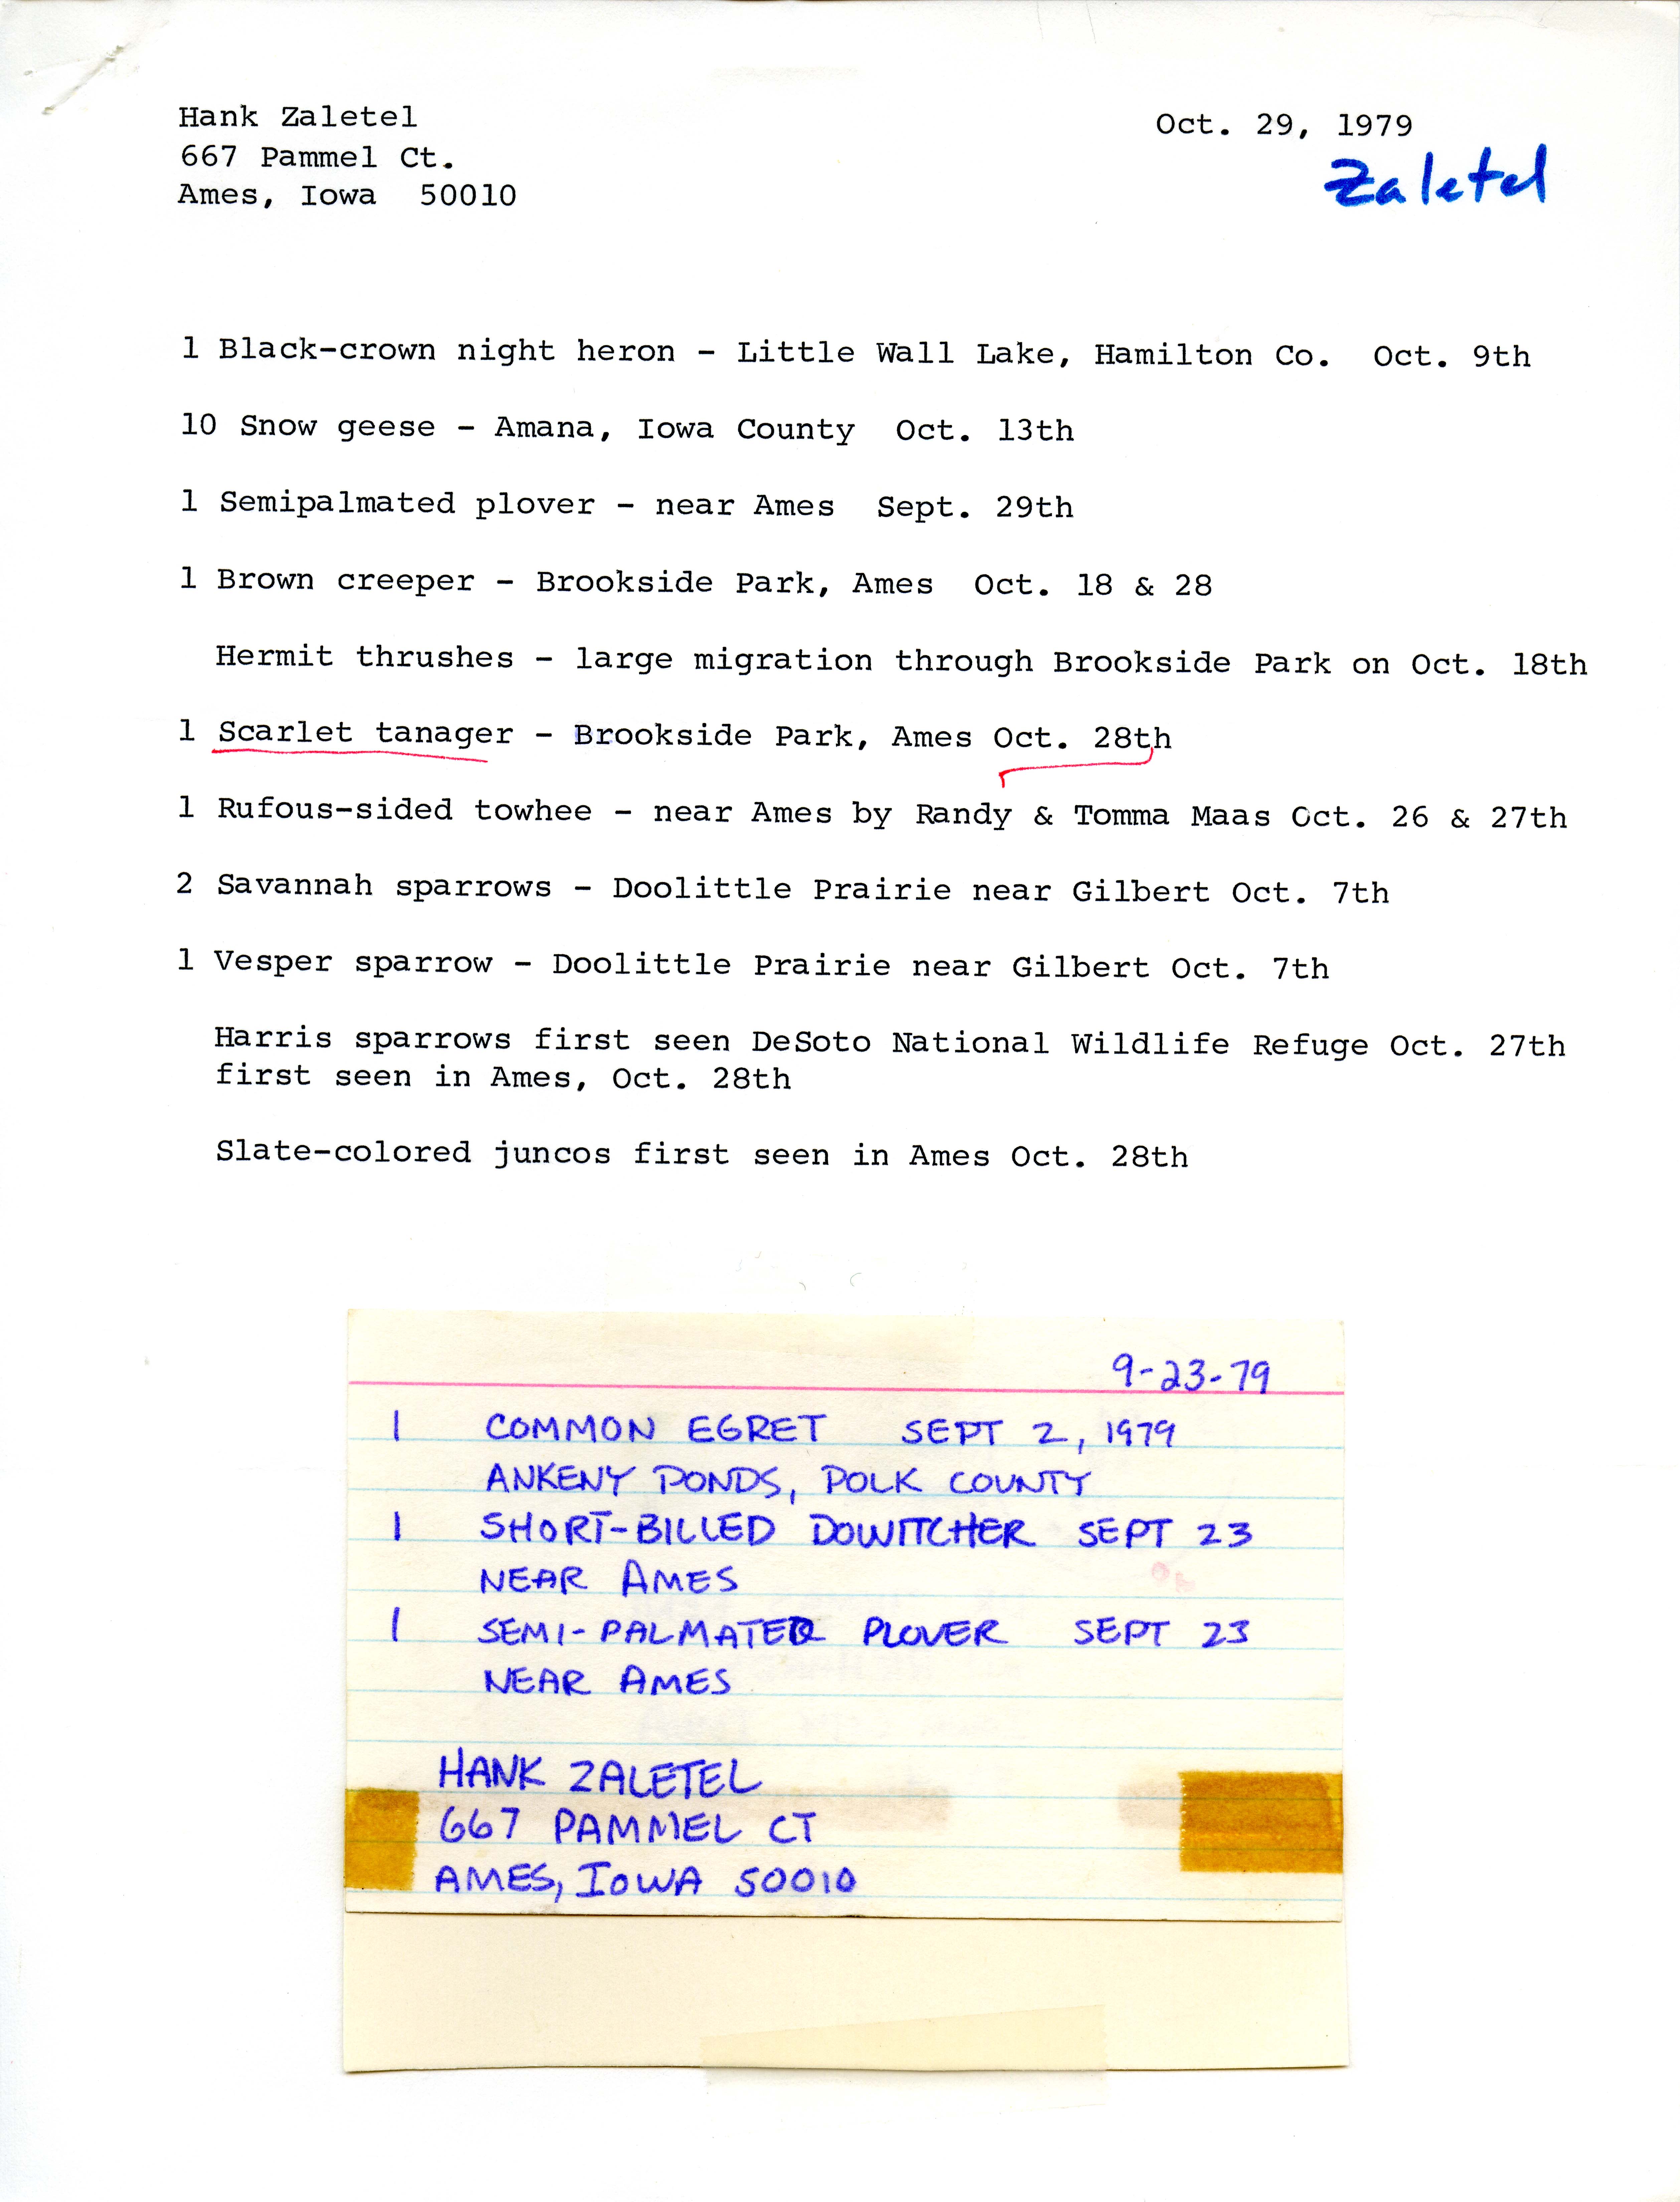 Letter from Hank and Linda Zaletel regarding bird sightings, October 29, 1979